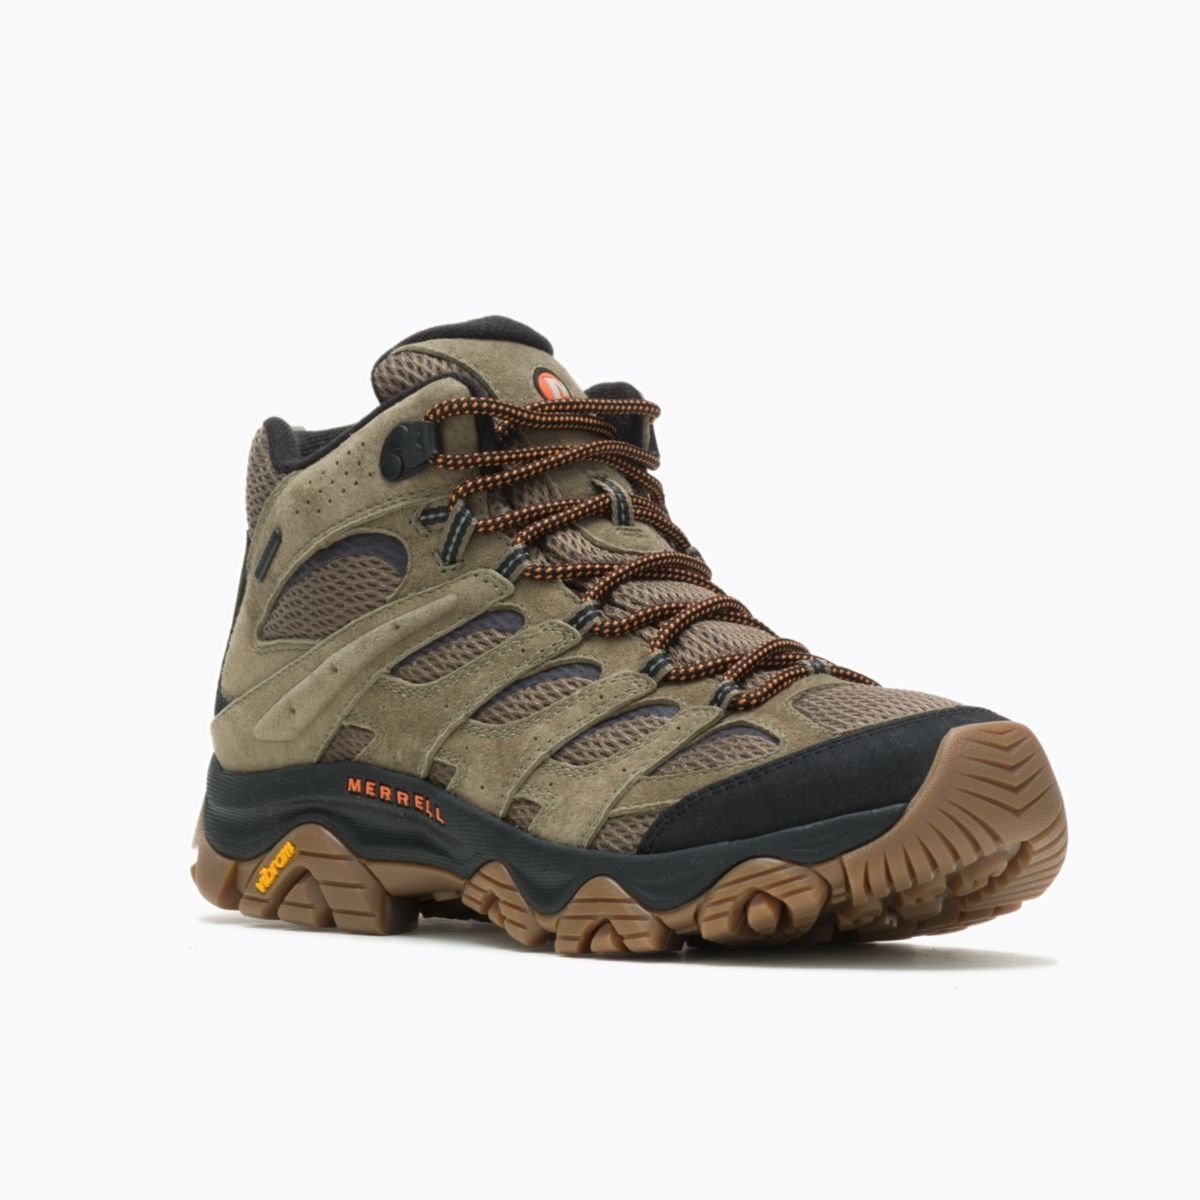 Merrell Men's Moab 3 Mid Waterproof Hiking Boot Olive/Gum - J036549 OLIVE/GUM - OLIVE/GUM, 10